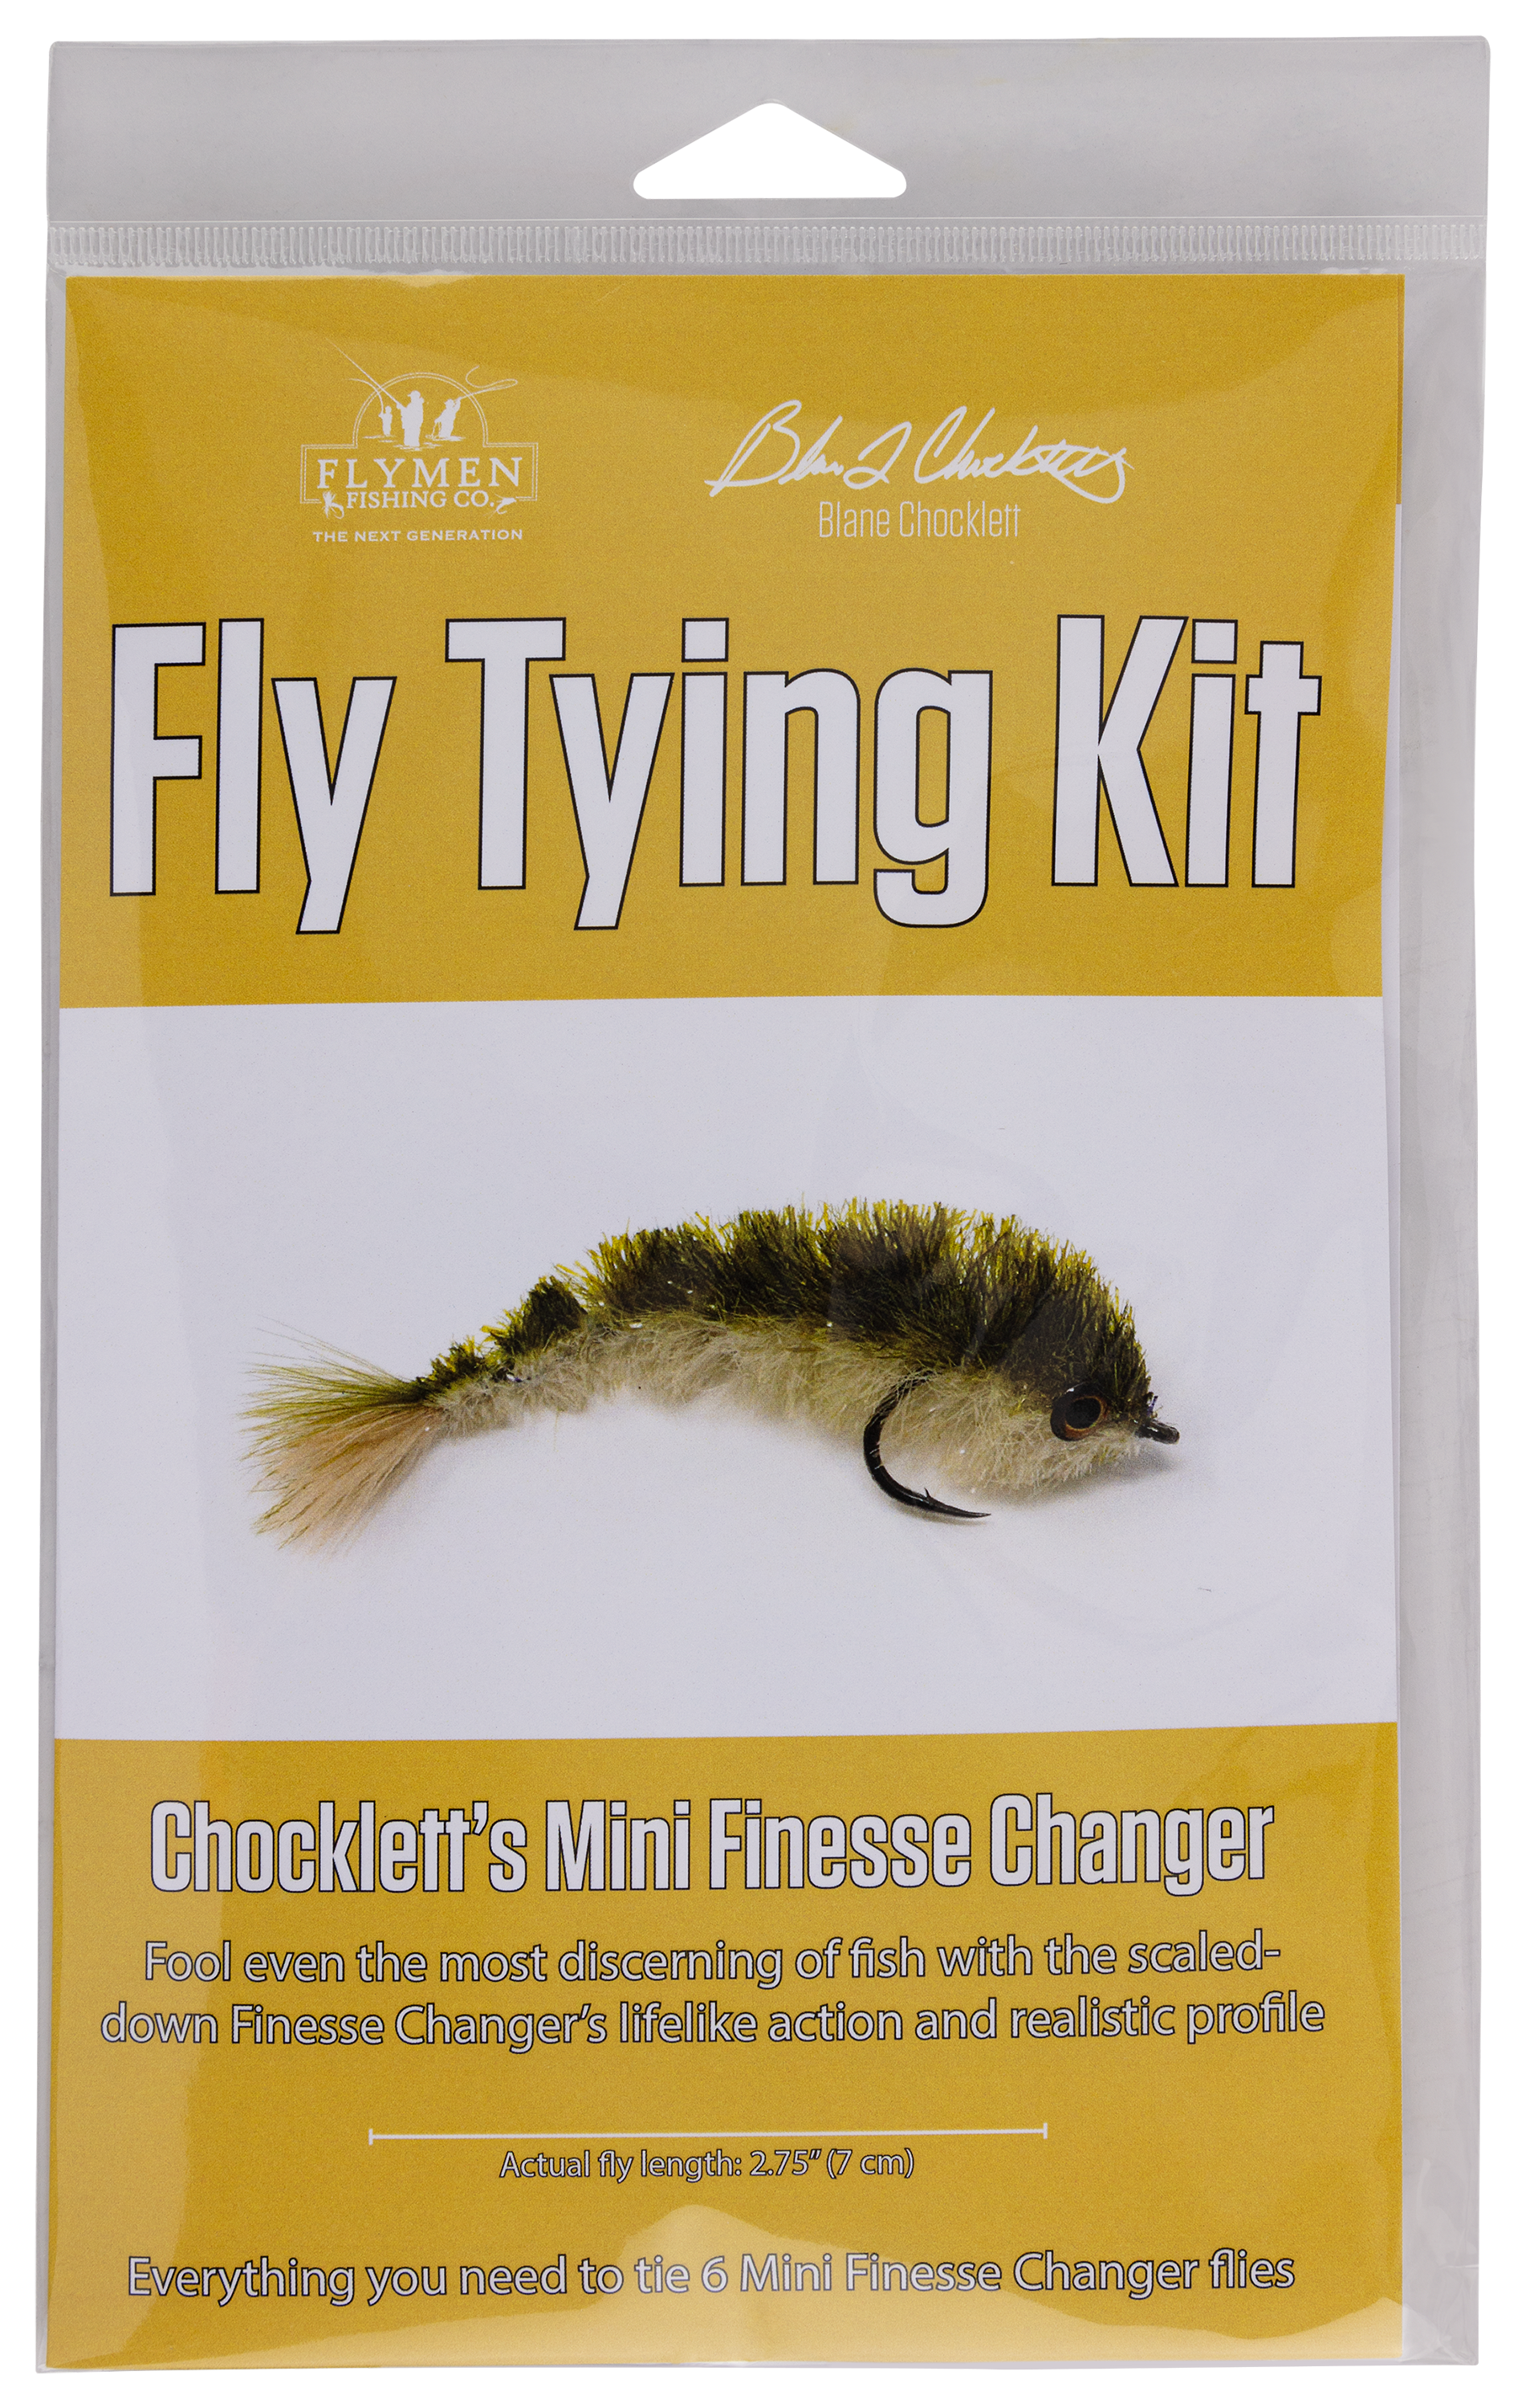 Flymen Fishing Company Chocklett's Mini Finesse Changer Fly Tying